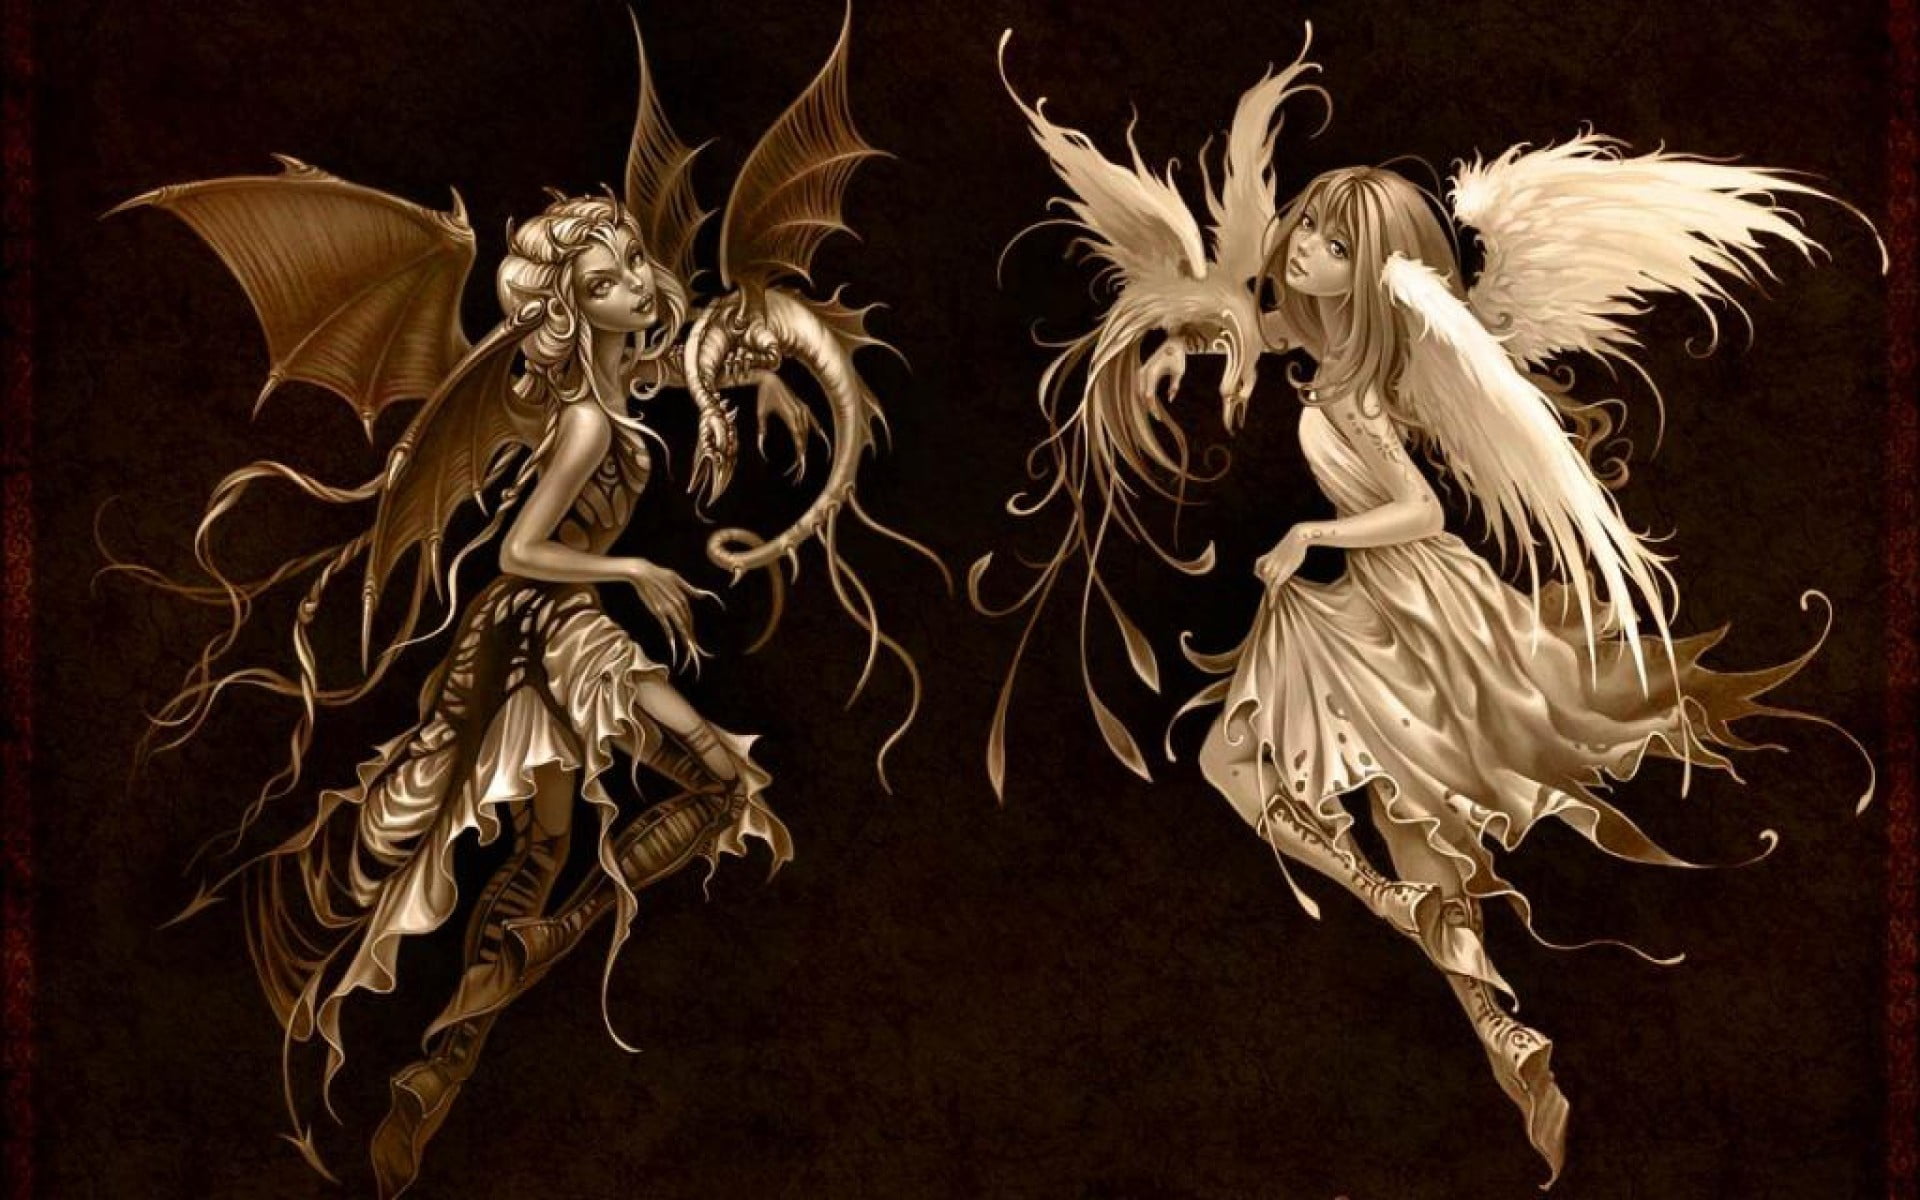 angel and demon girls poster, wings, Devil, dragon, phoenix, black background